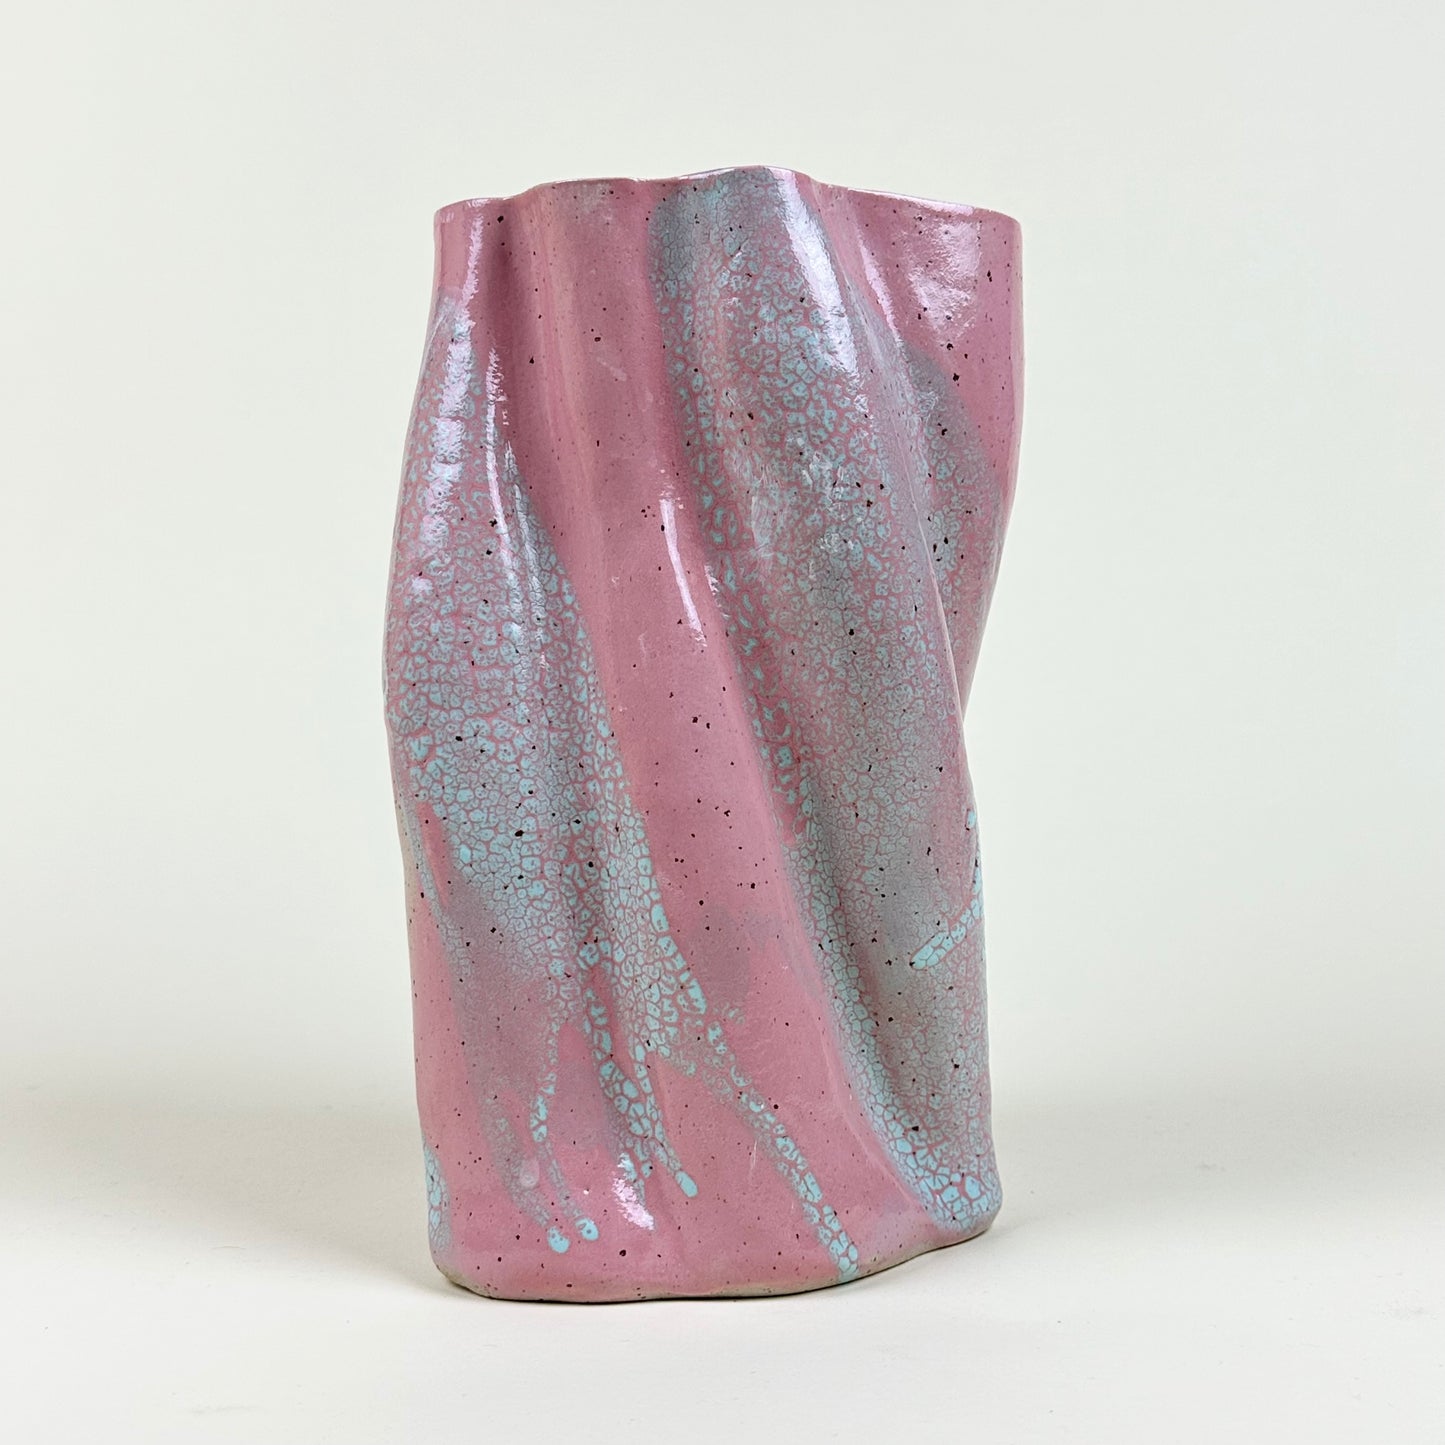 Ceramic vase, pink and light blue, by Astrid Öhman